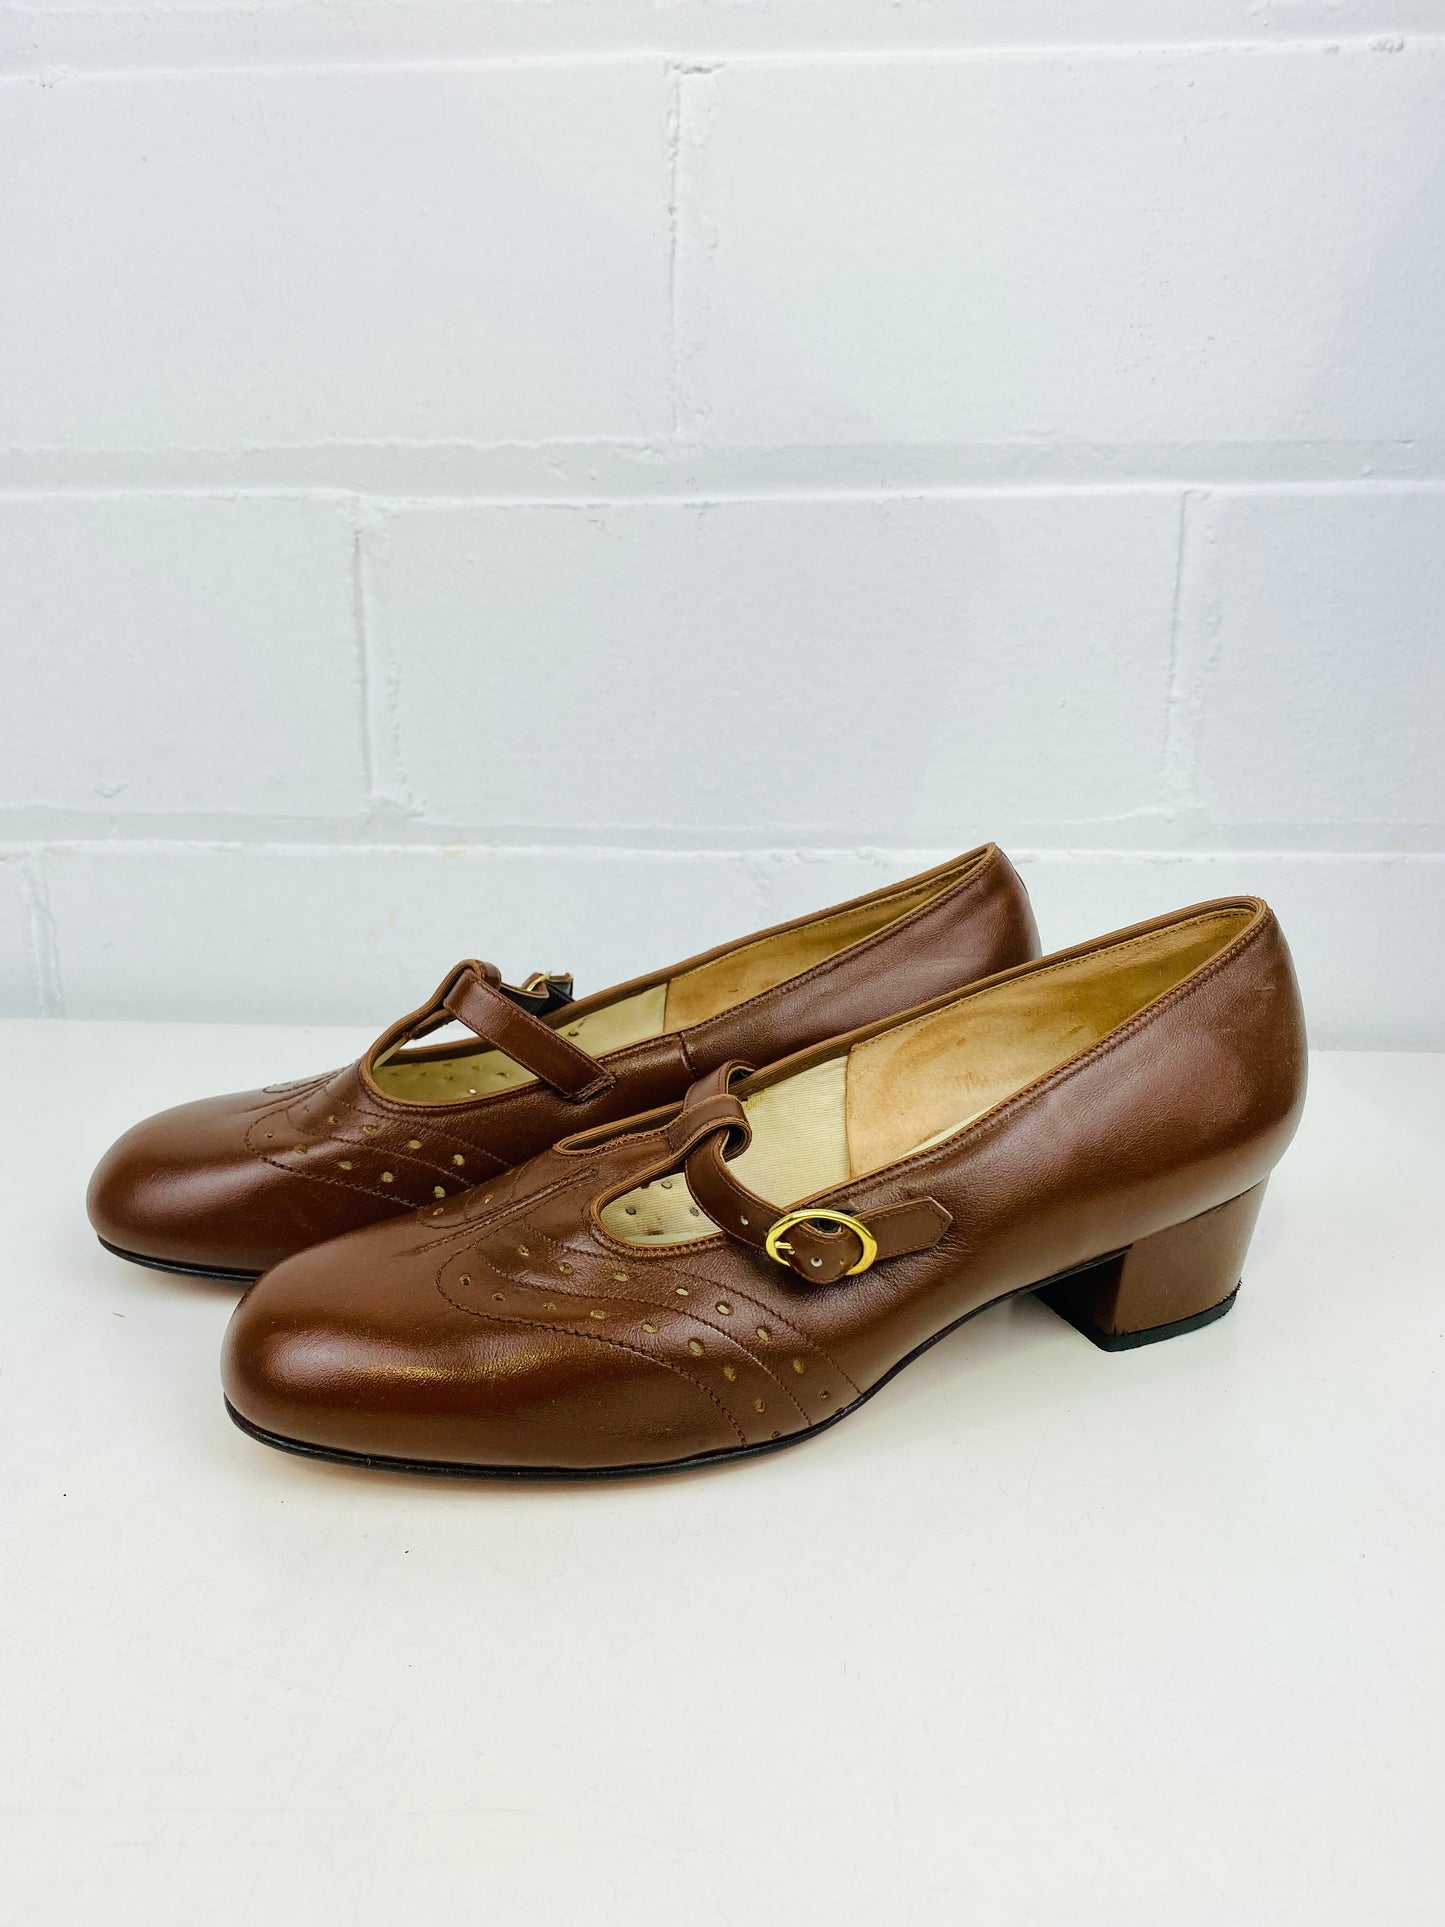 Vintage Deadstock Shoes, Women's 1980s Brown Leather Mid-Heel T-Strap Pumps, NOS, 7782